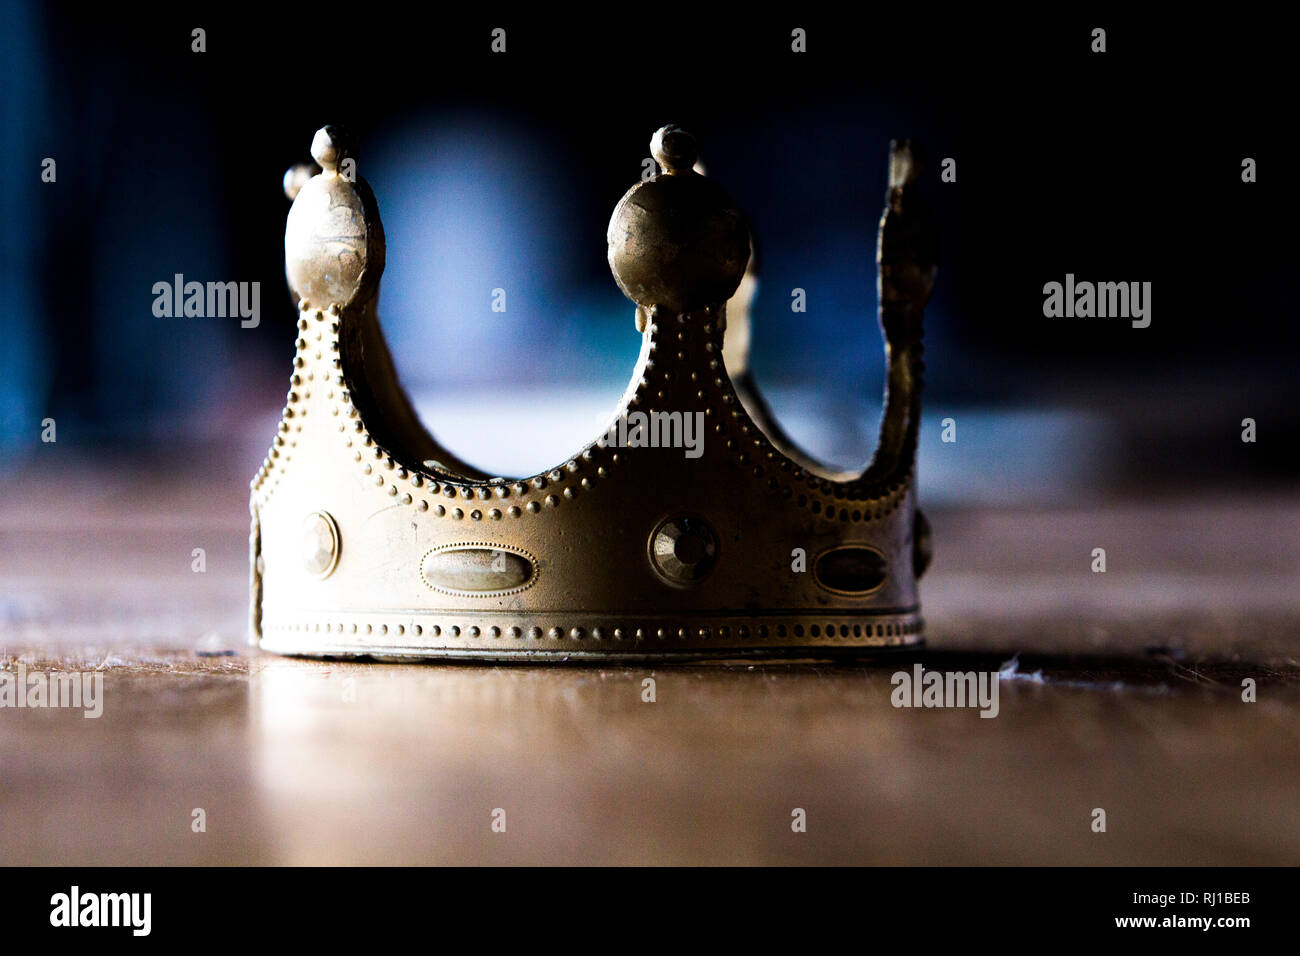 Plastic crown representing fake power Stock Photo